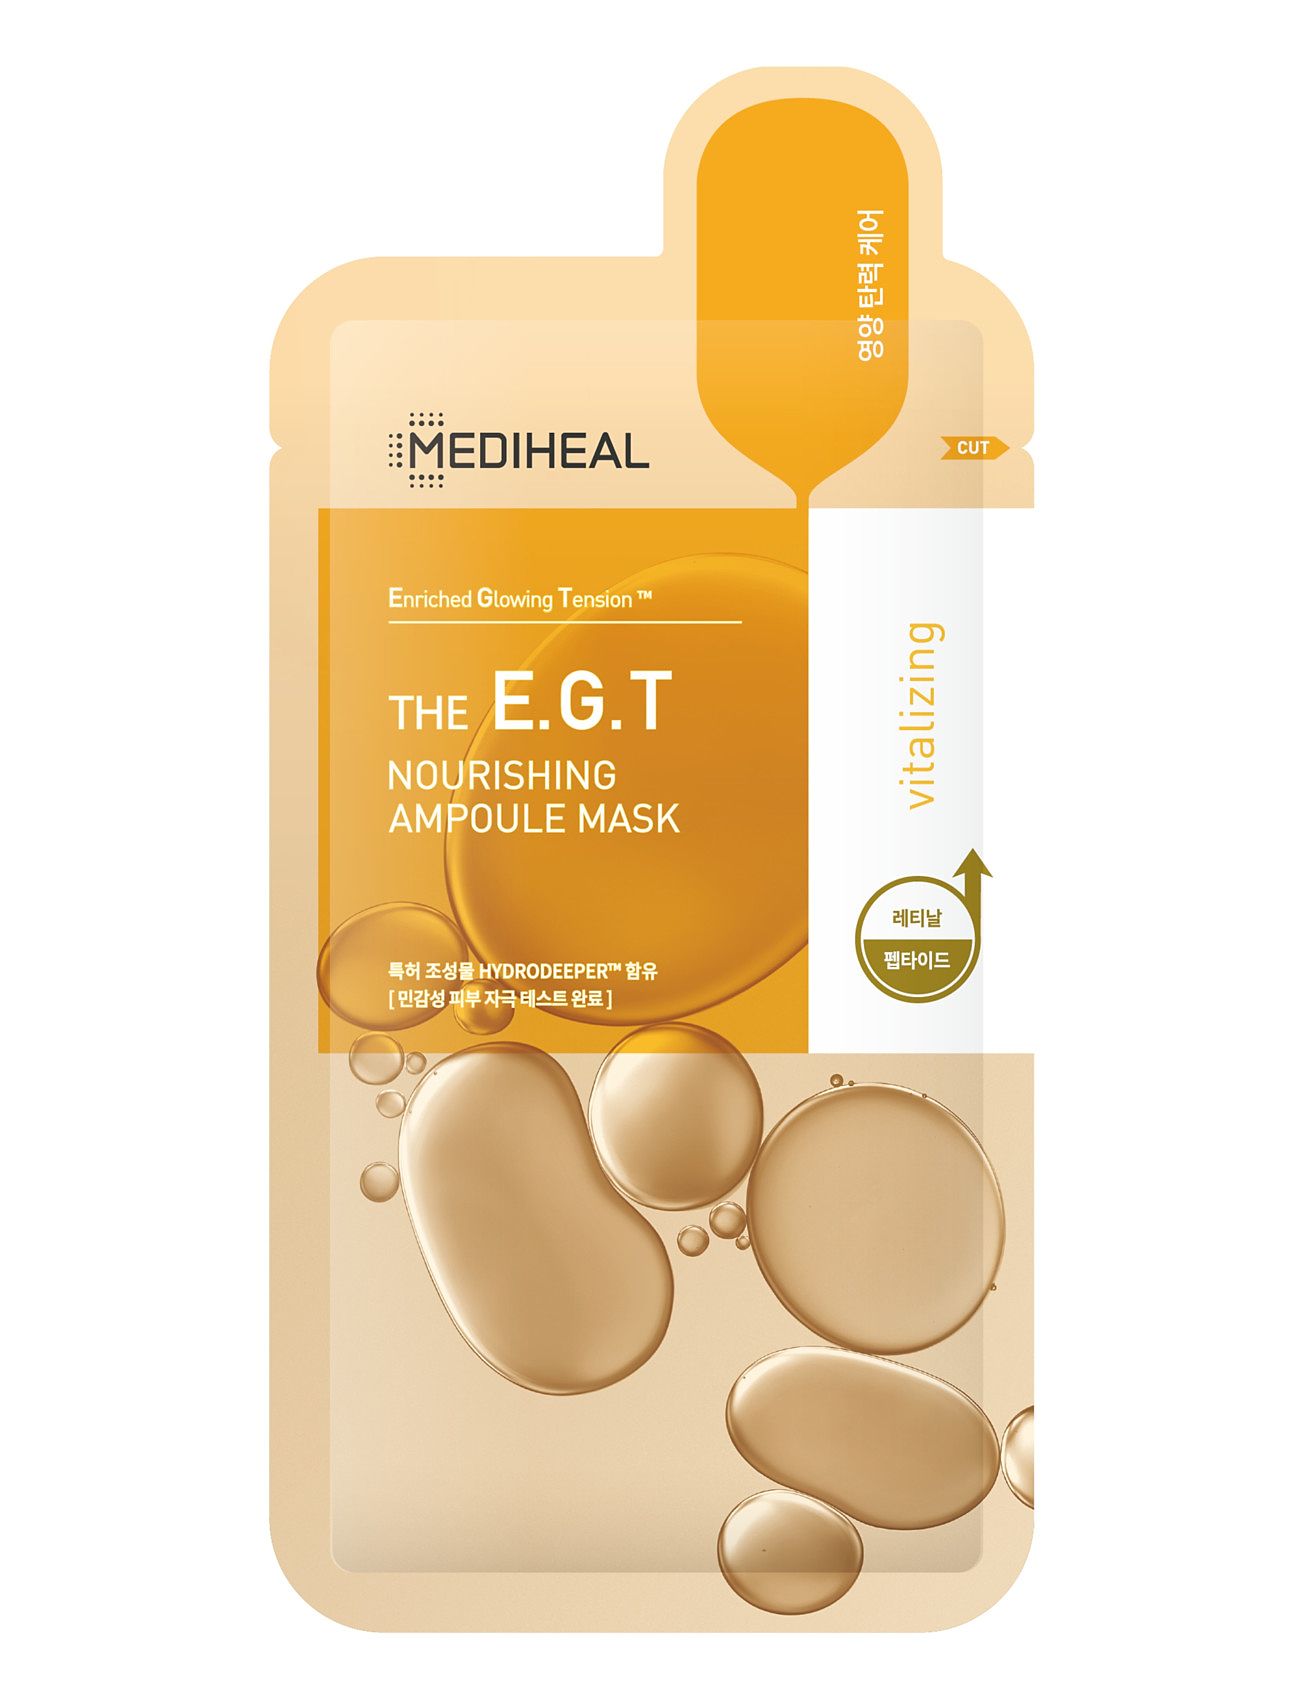 Mediheal The E.g.t Nourishing Ampoule Mask Beauty Women Skin Care Face Face Masks Moisturizing Mask Nude Mediheal